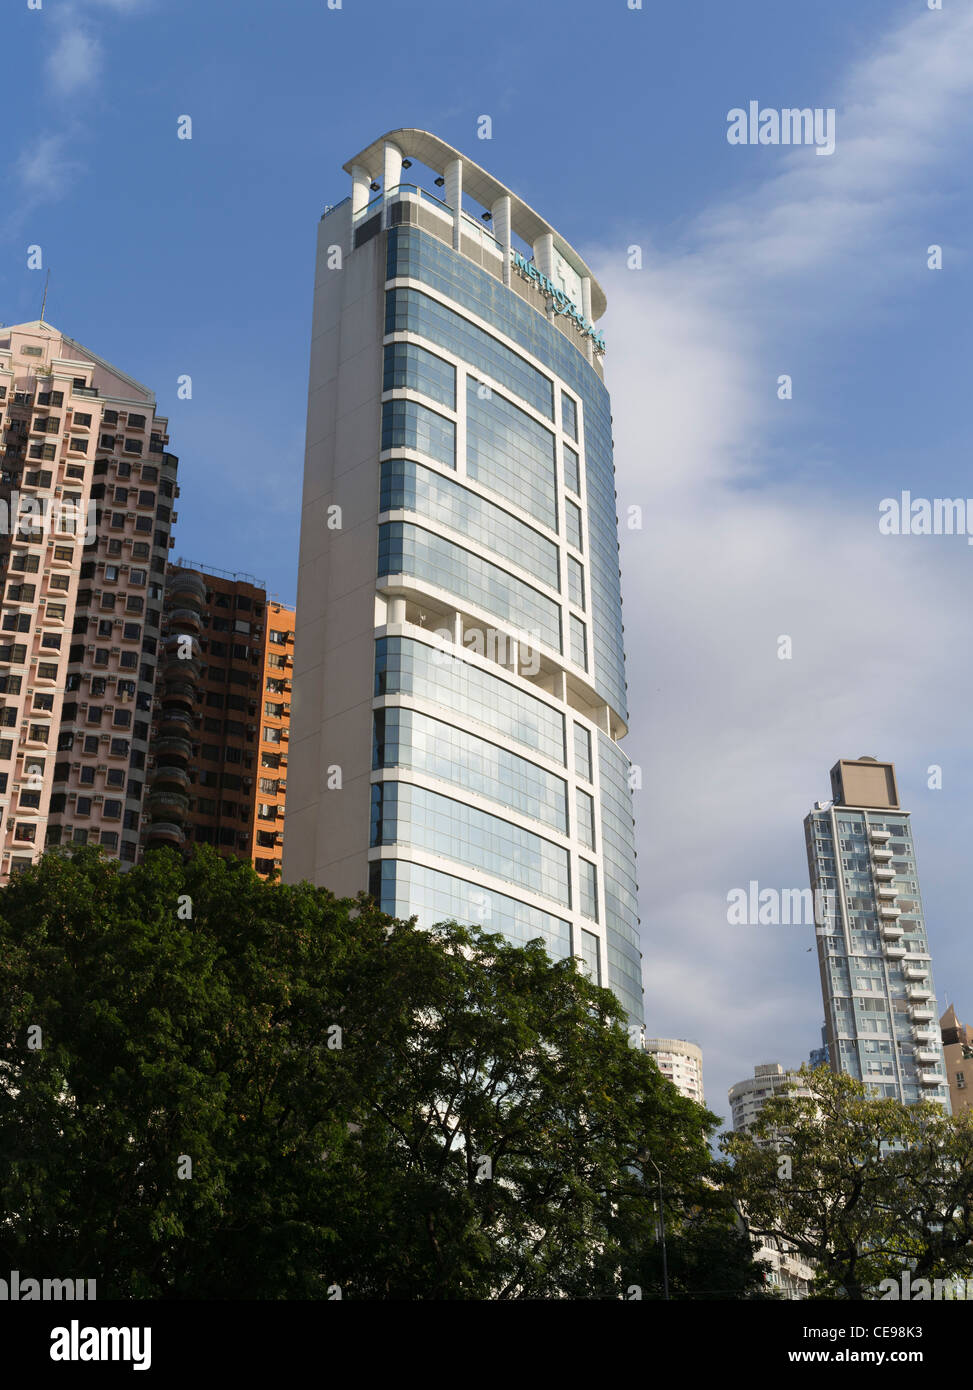 dh CAUSEWAY BAY HONG KONG Metropark Hotel Hong Kong gratte-ciel bâtiment hôtels modernes asie architecture chine Banque D'Images